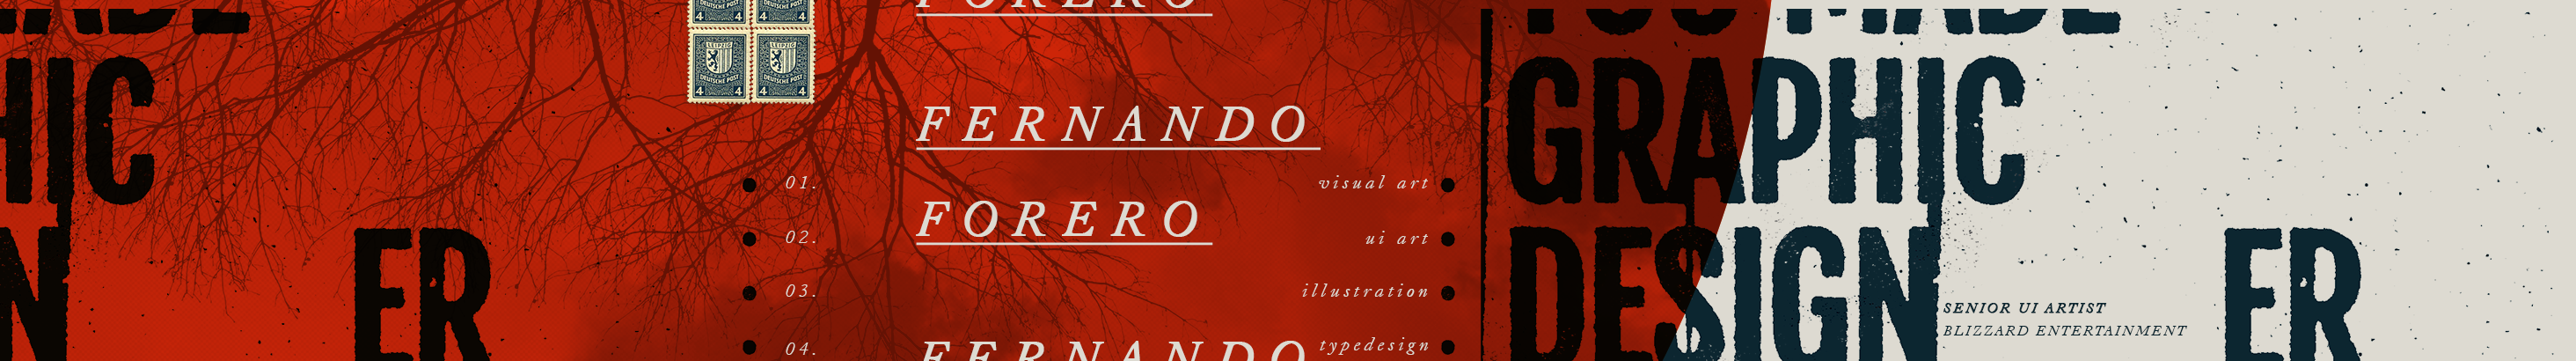 Fernando Forero's profile banner